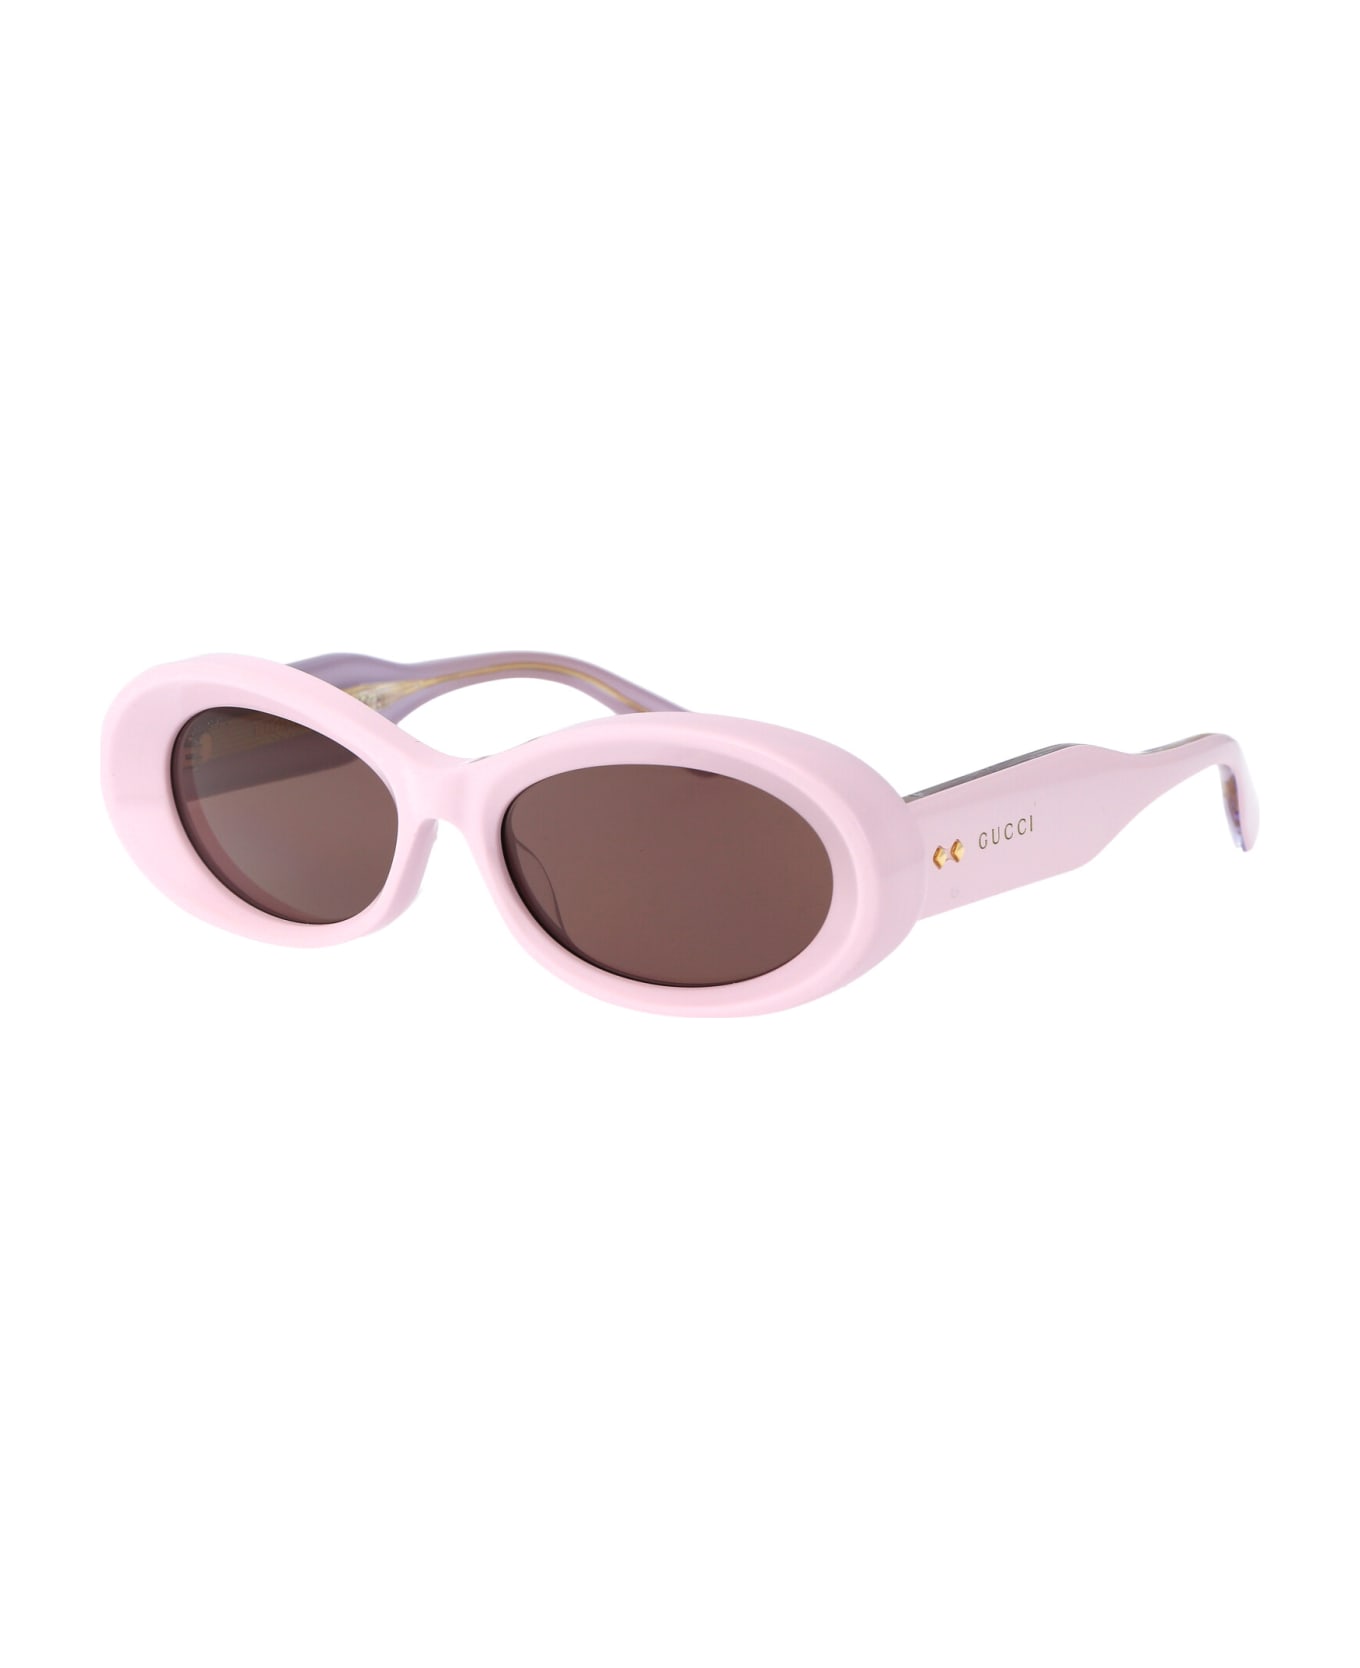 Gucci Eyewear Gg1527s Sunglasses - 003 PINK PINK BROWN サングラス